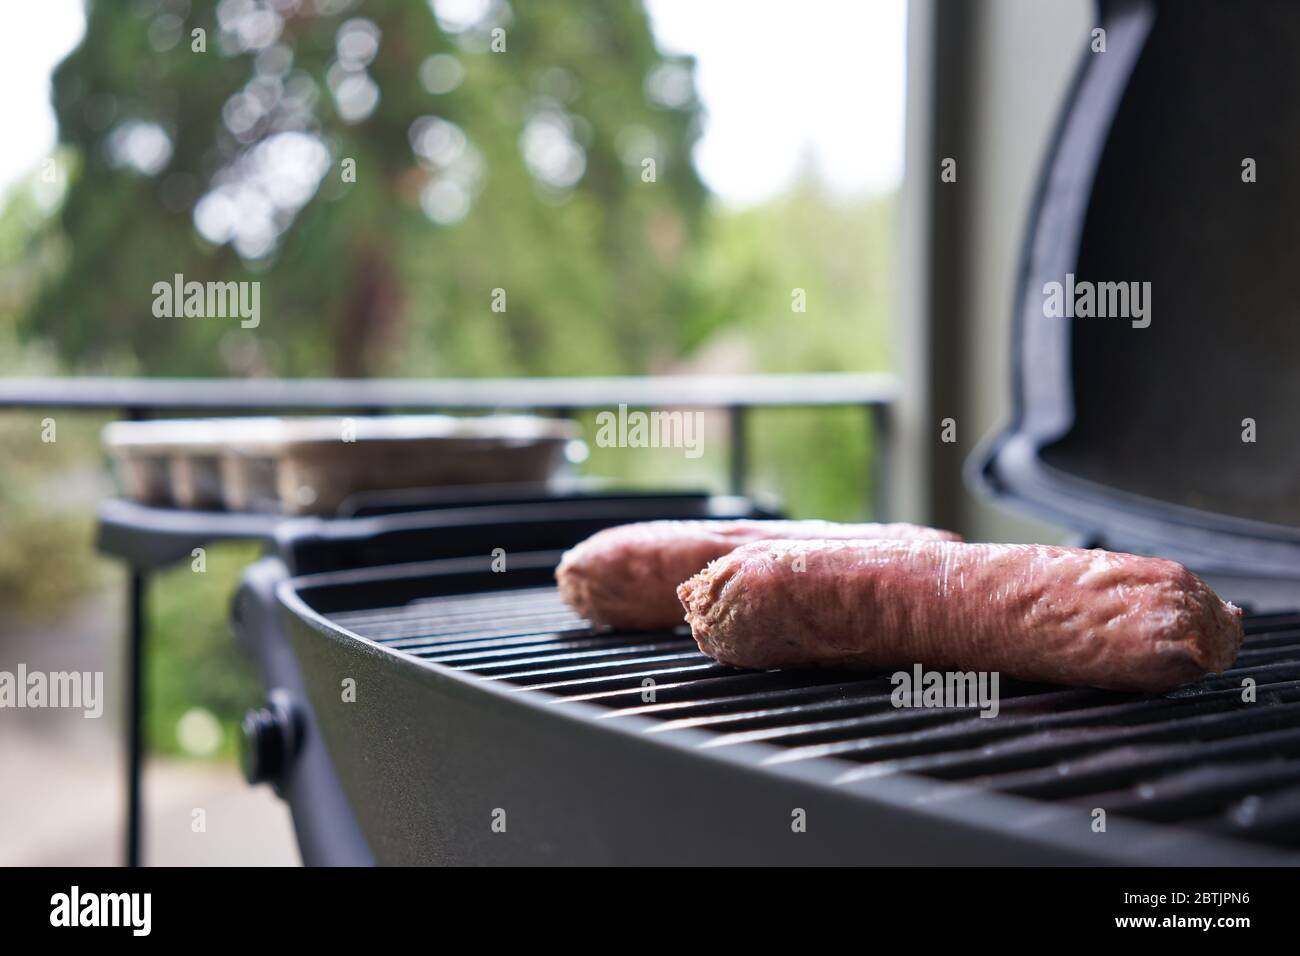 https://c8.alamy.com/comp/2BTJPN6/plant-based-beyond-meat-sausages-on-the-grill-selective-focus-on-one-of-the-vegan-sausage-ends-2BTJPN6.jpg